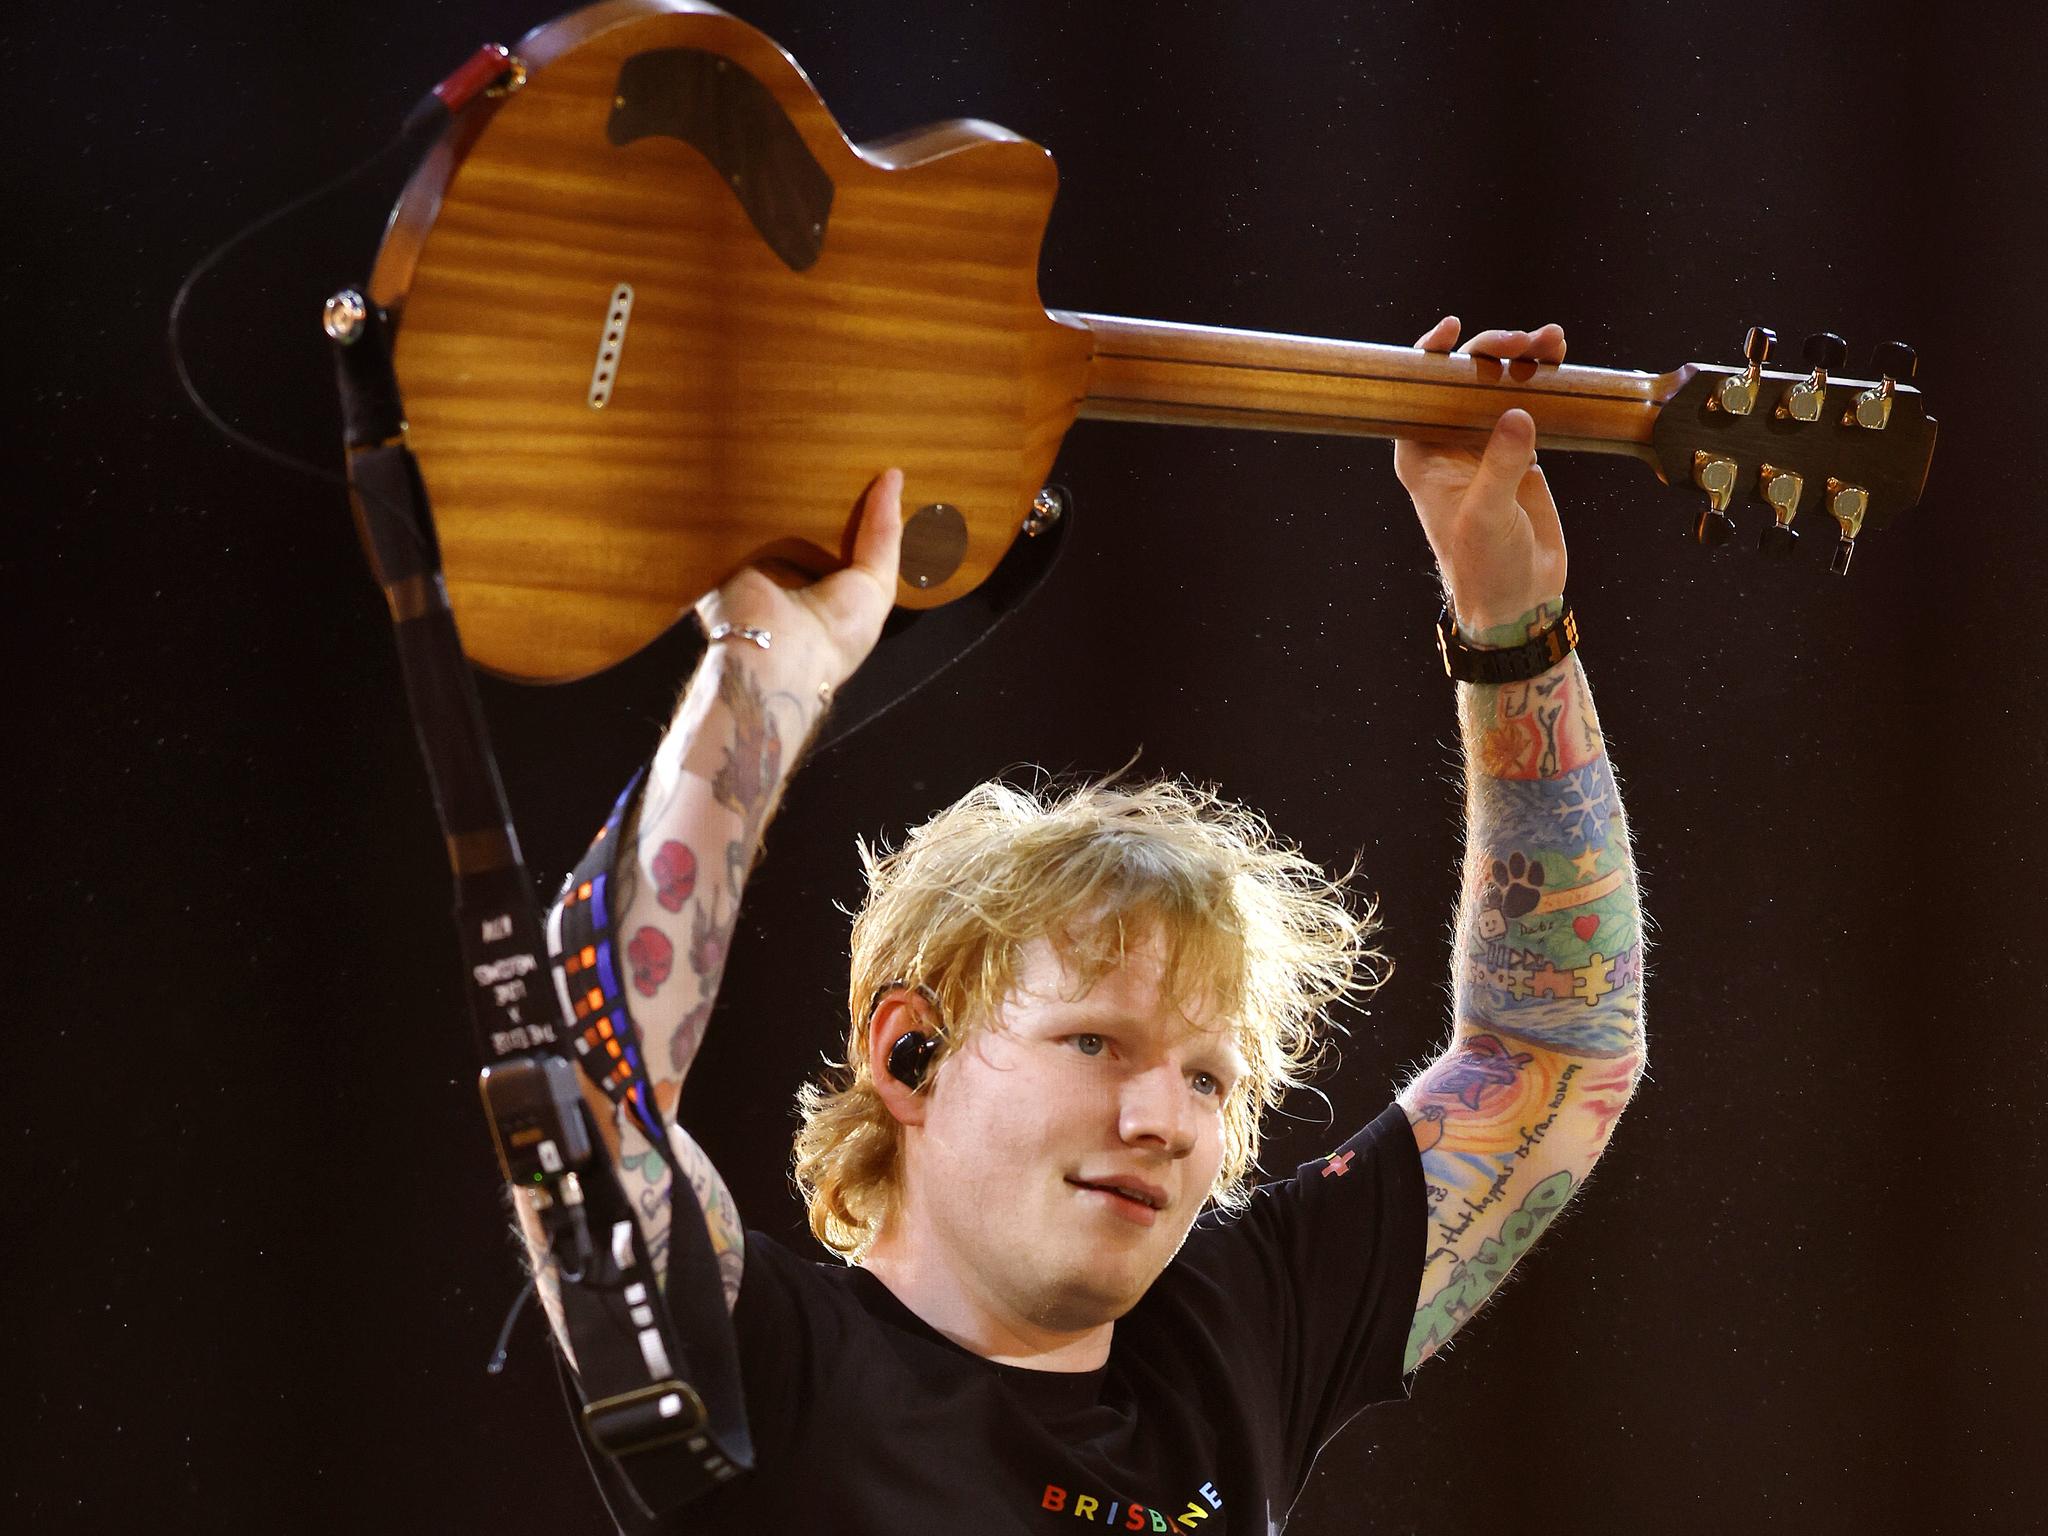 Ed Sheeran Brisbane concert review The Australian